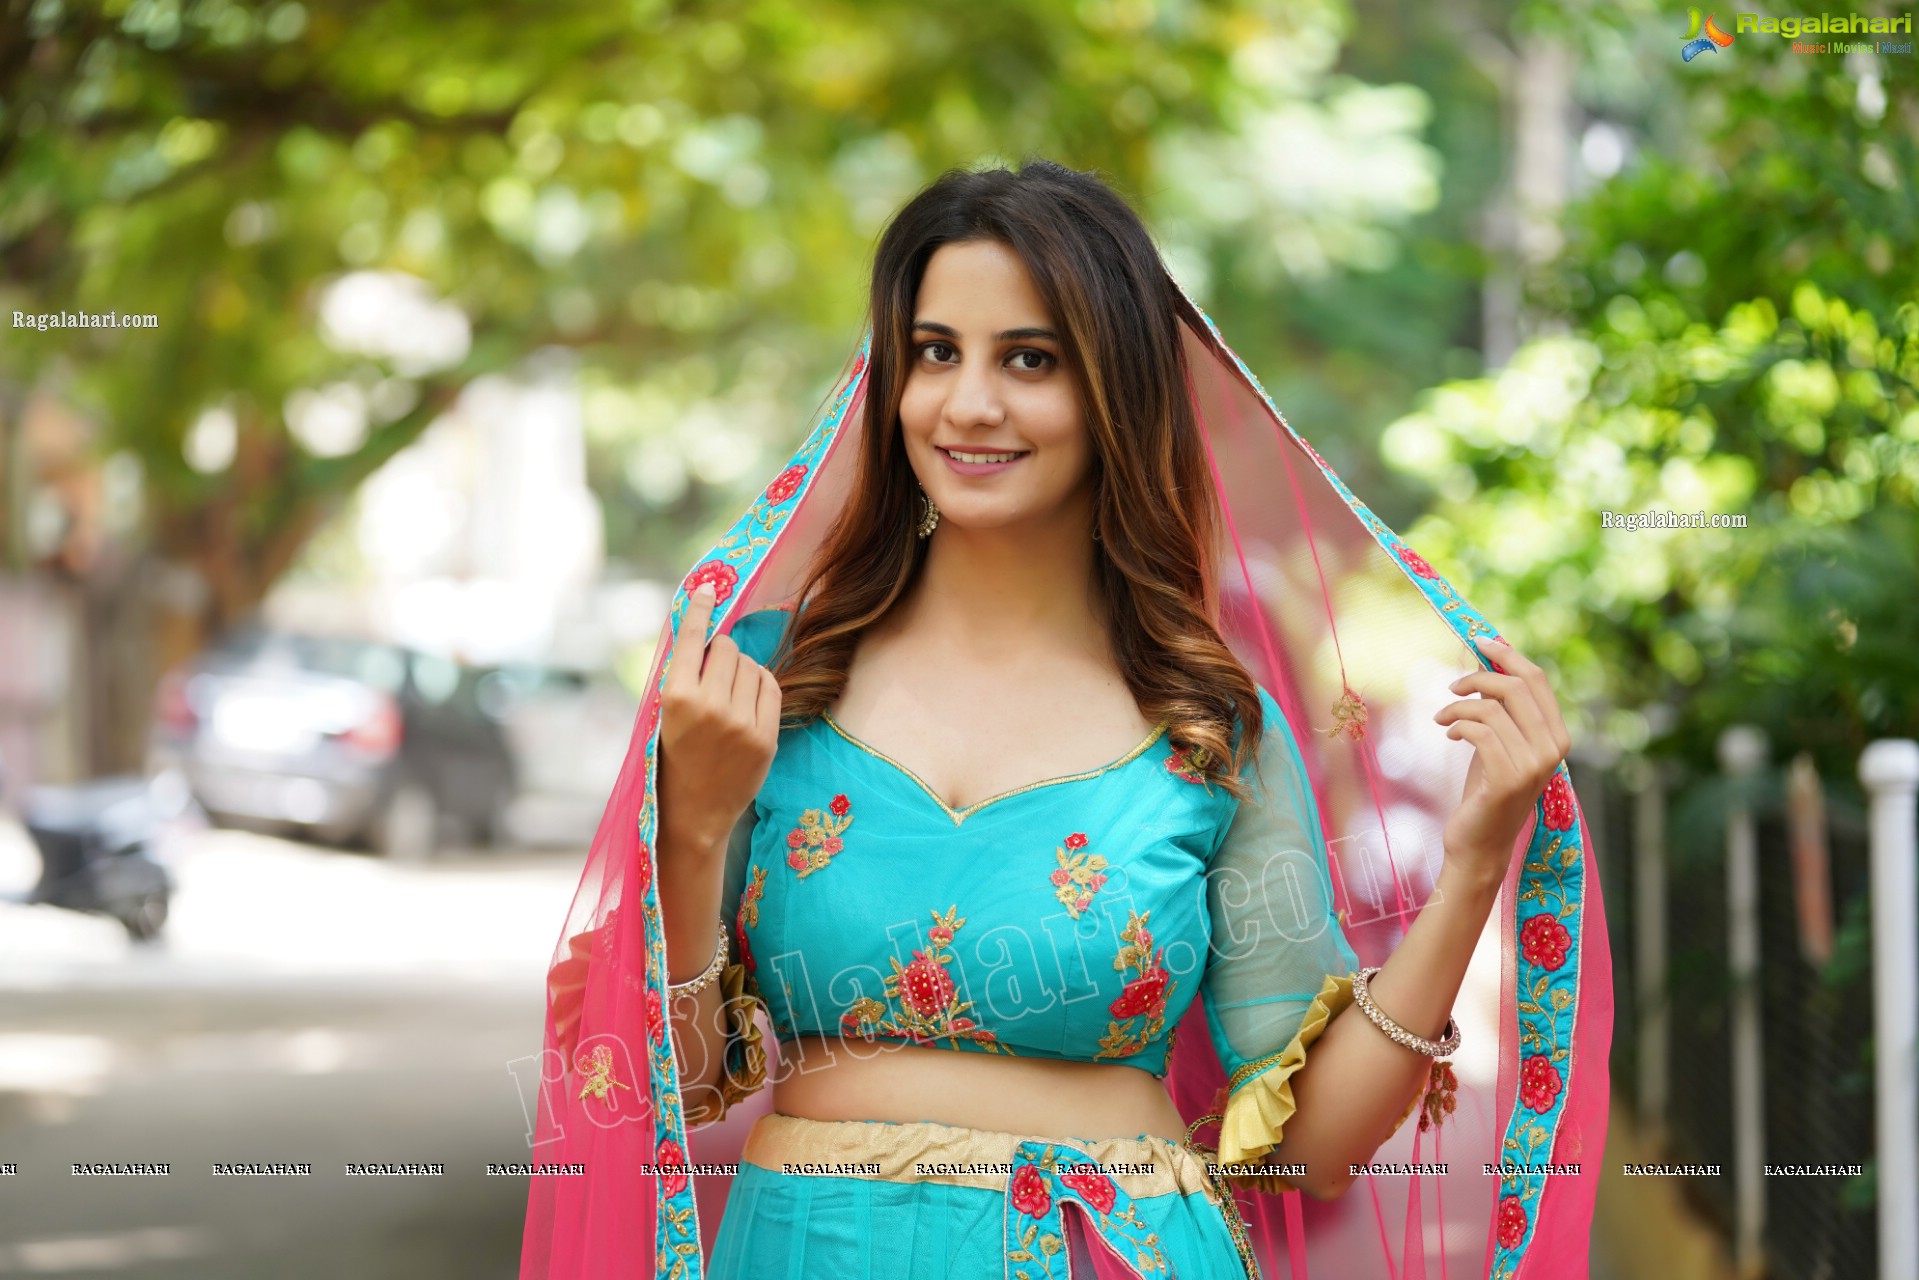 Tejal Tammali in Cyan Blue Embellished Lehenga, Exclusive Photoshoot